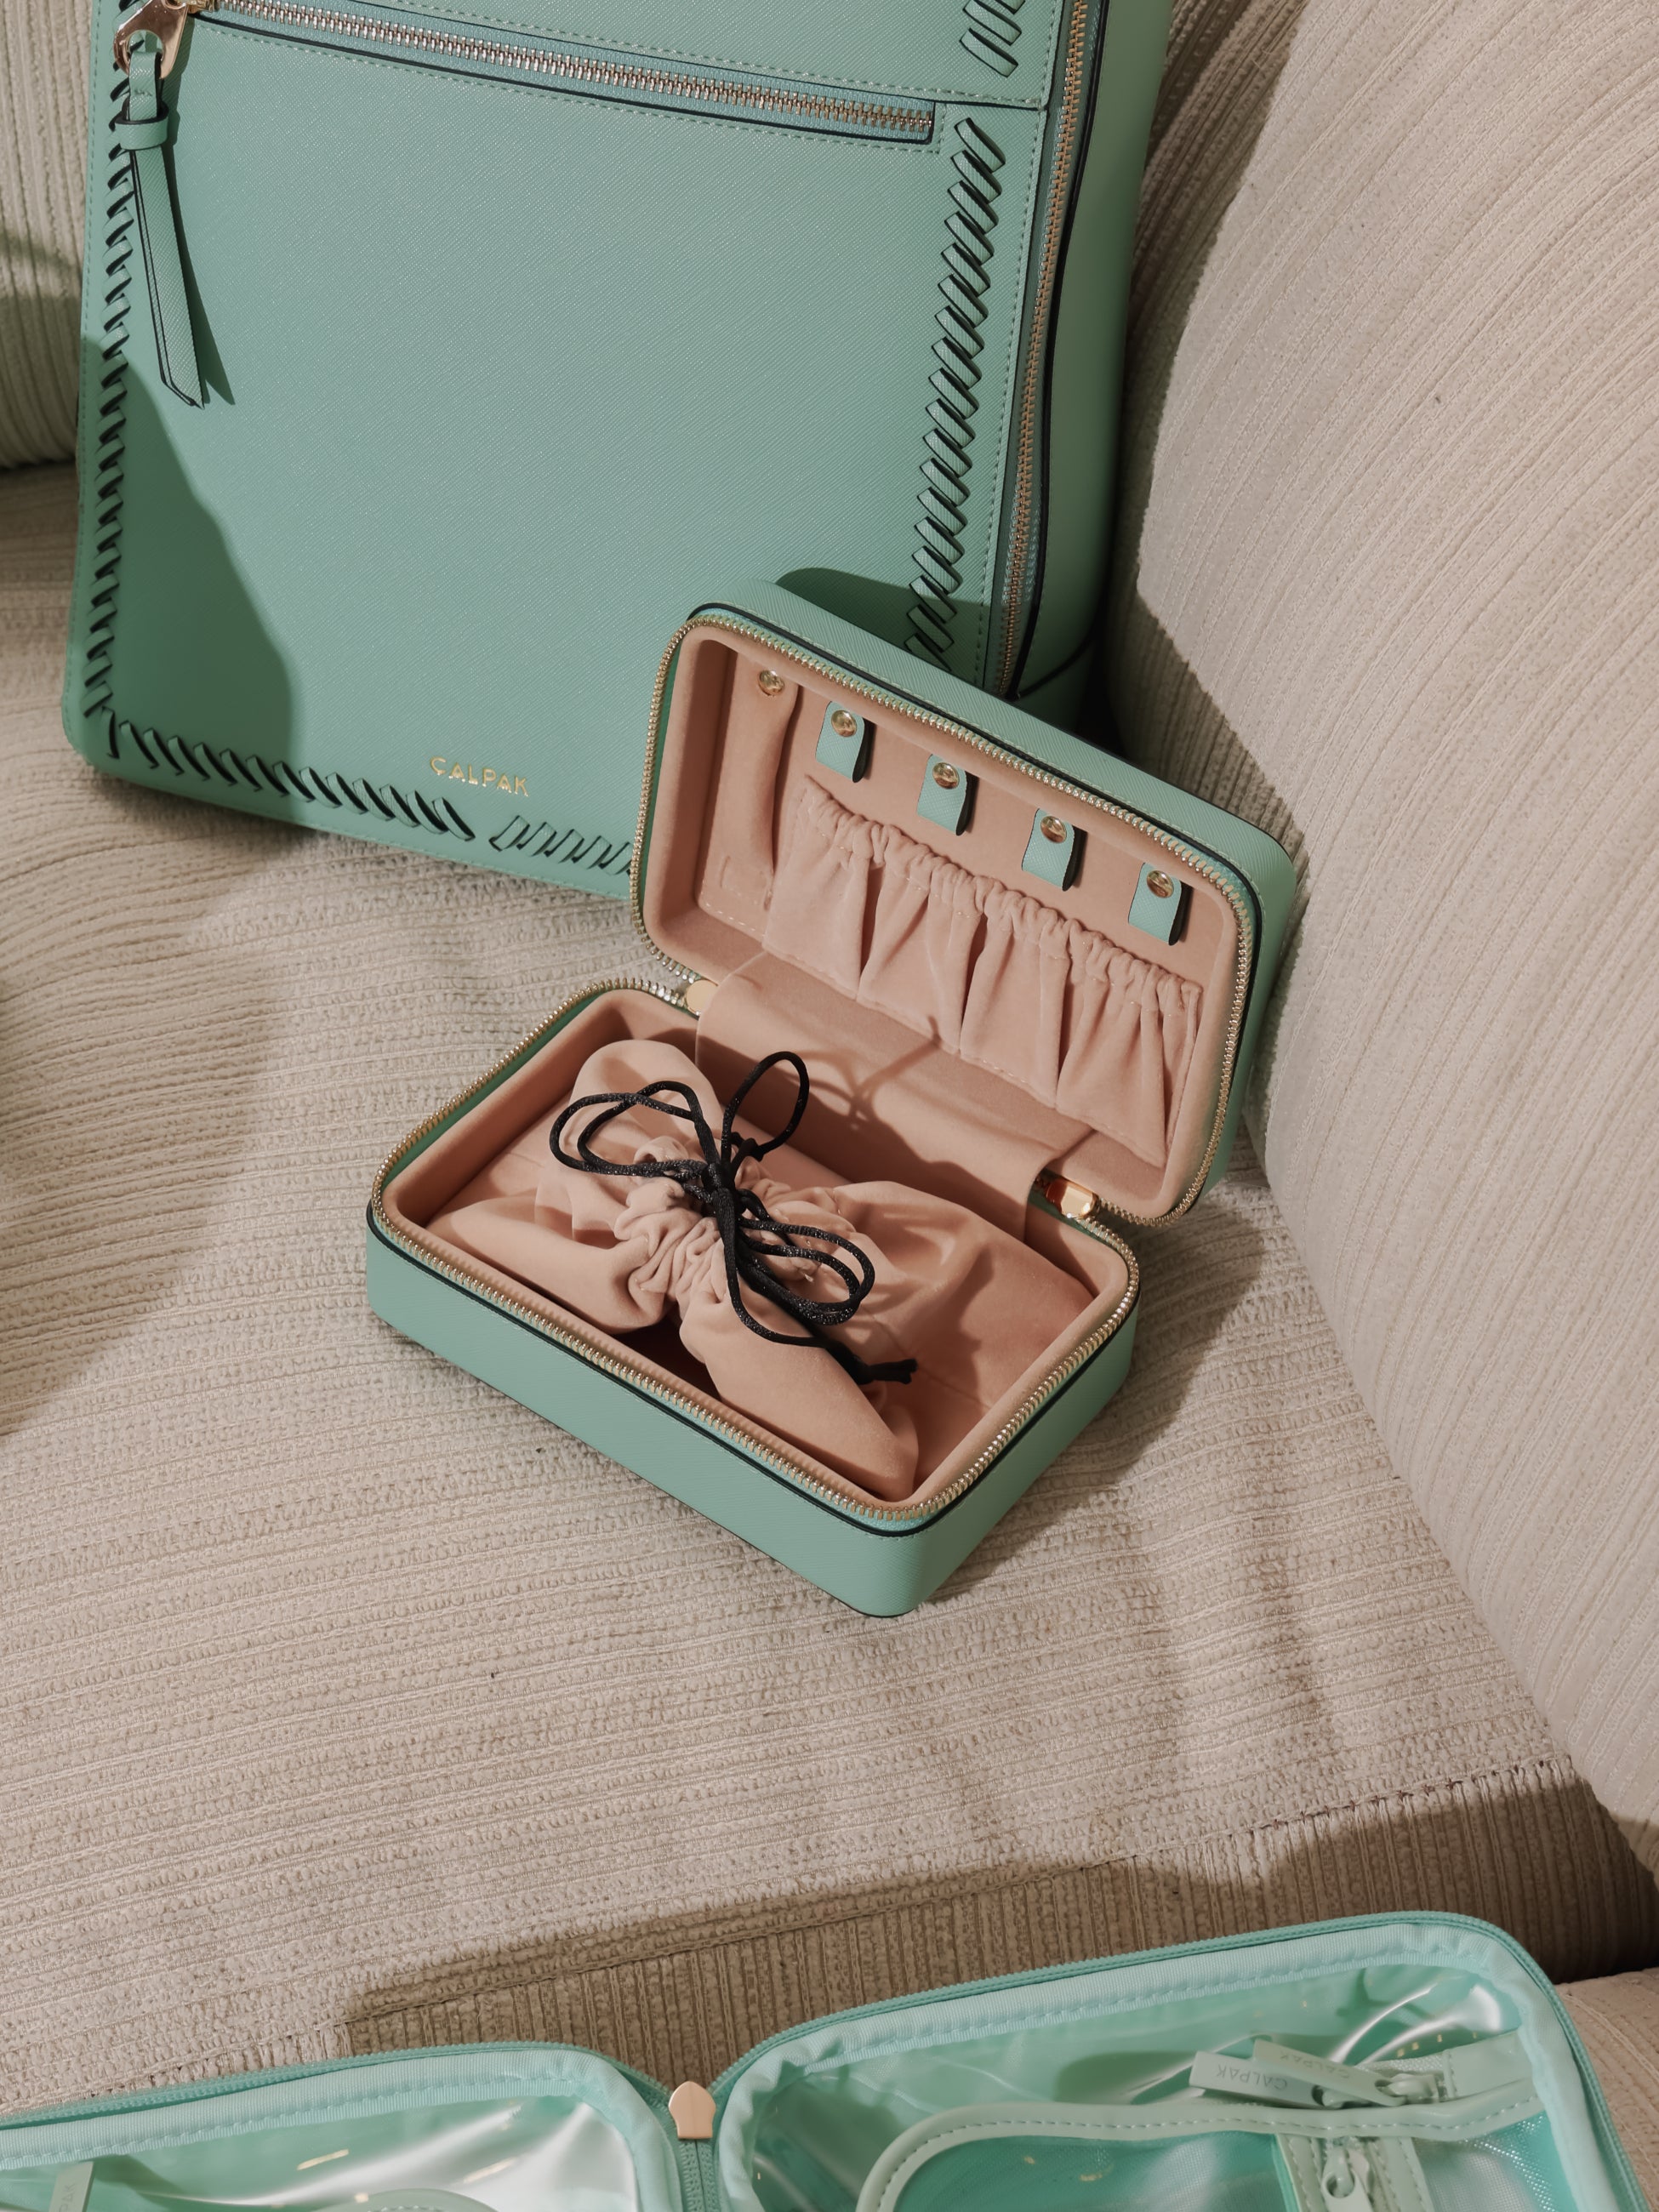 CALPAK travel jewelry case with drawstring pouch in aqua